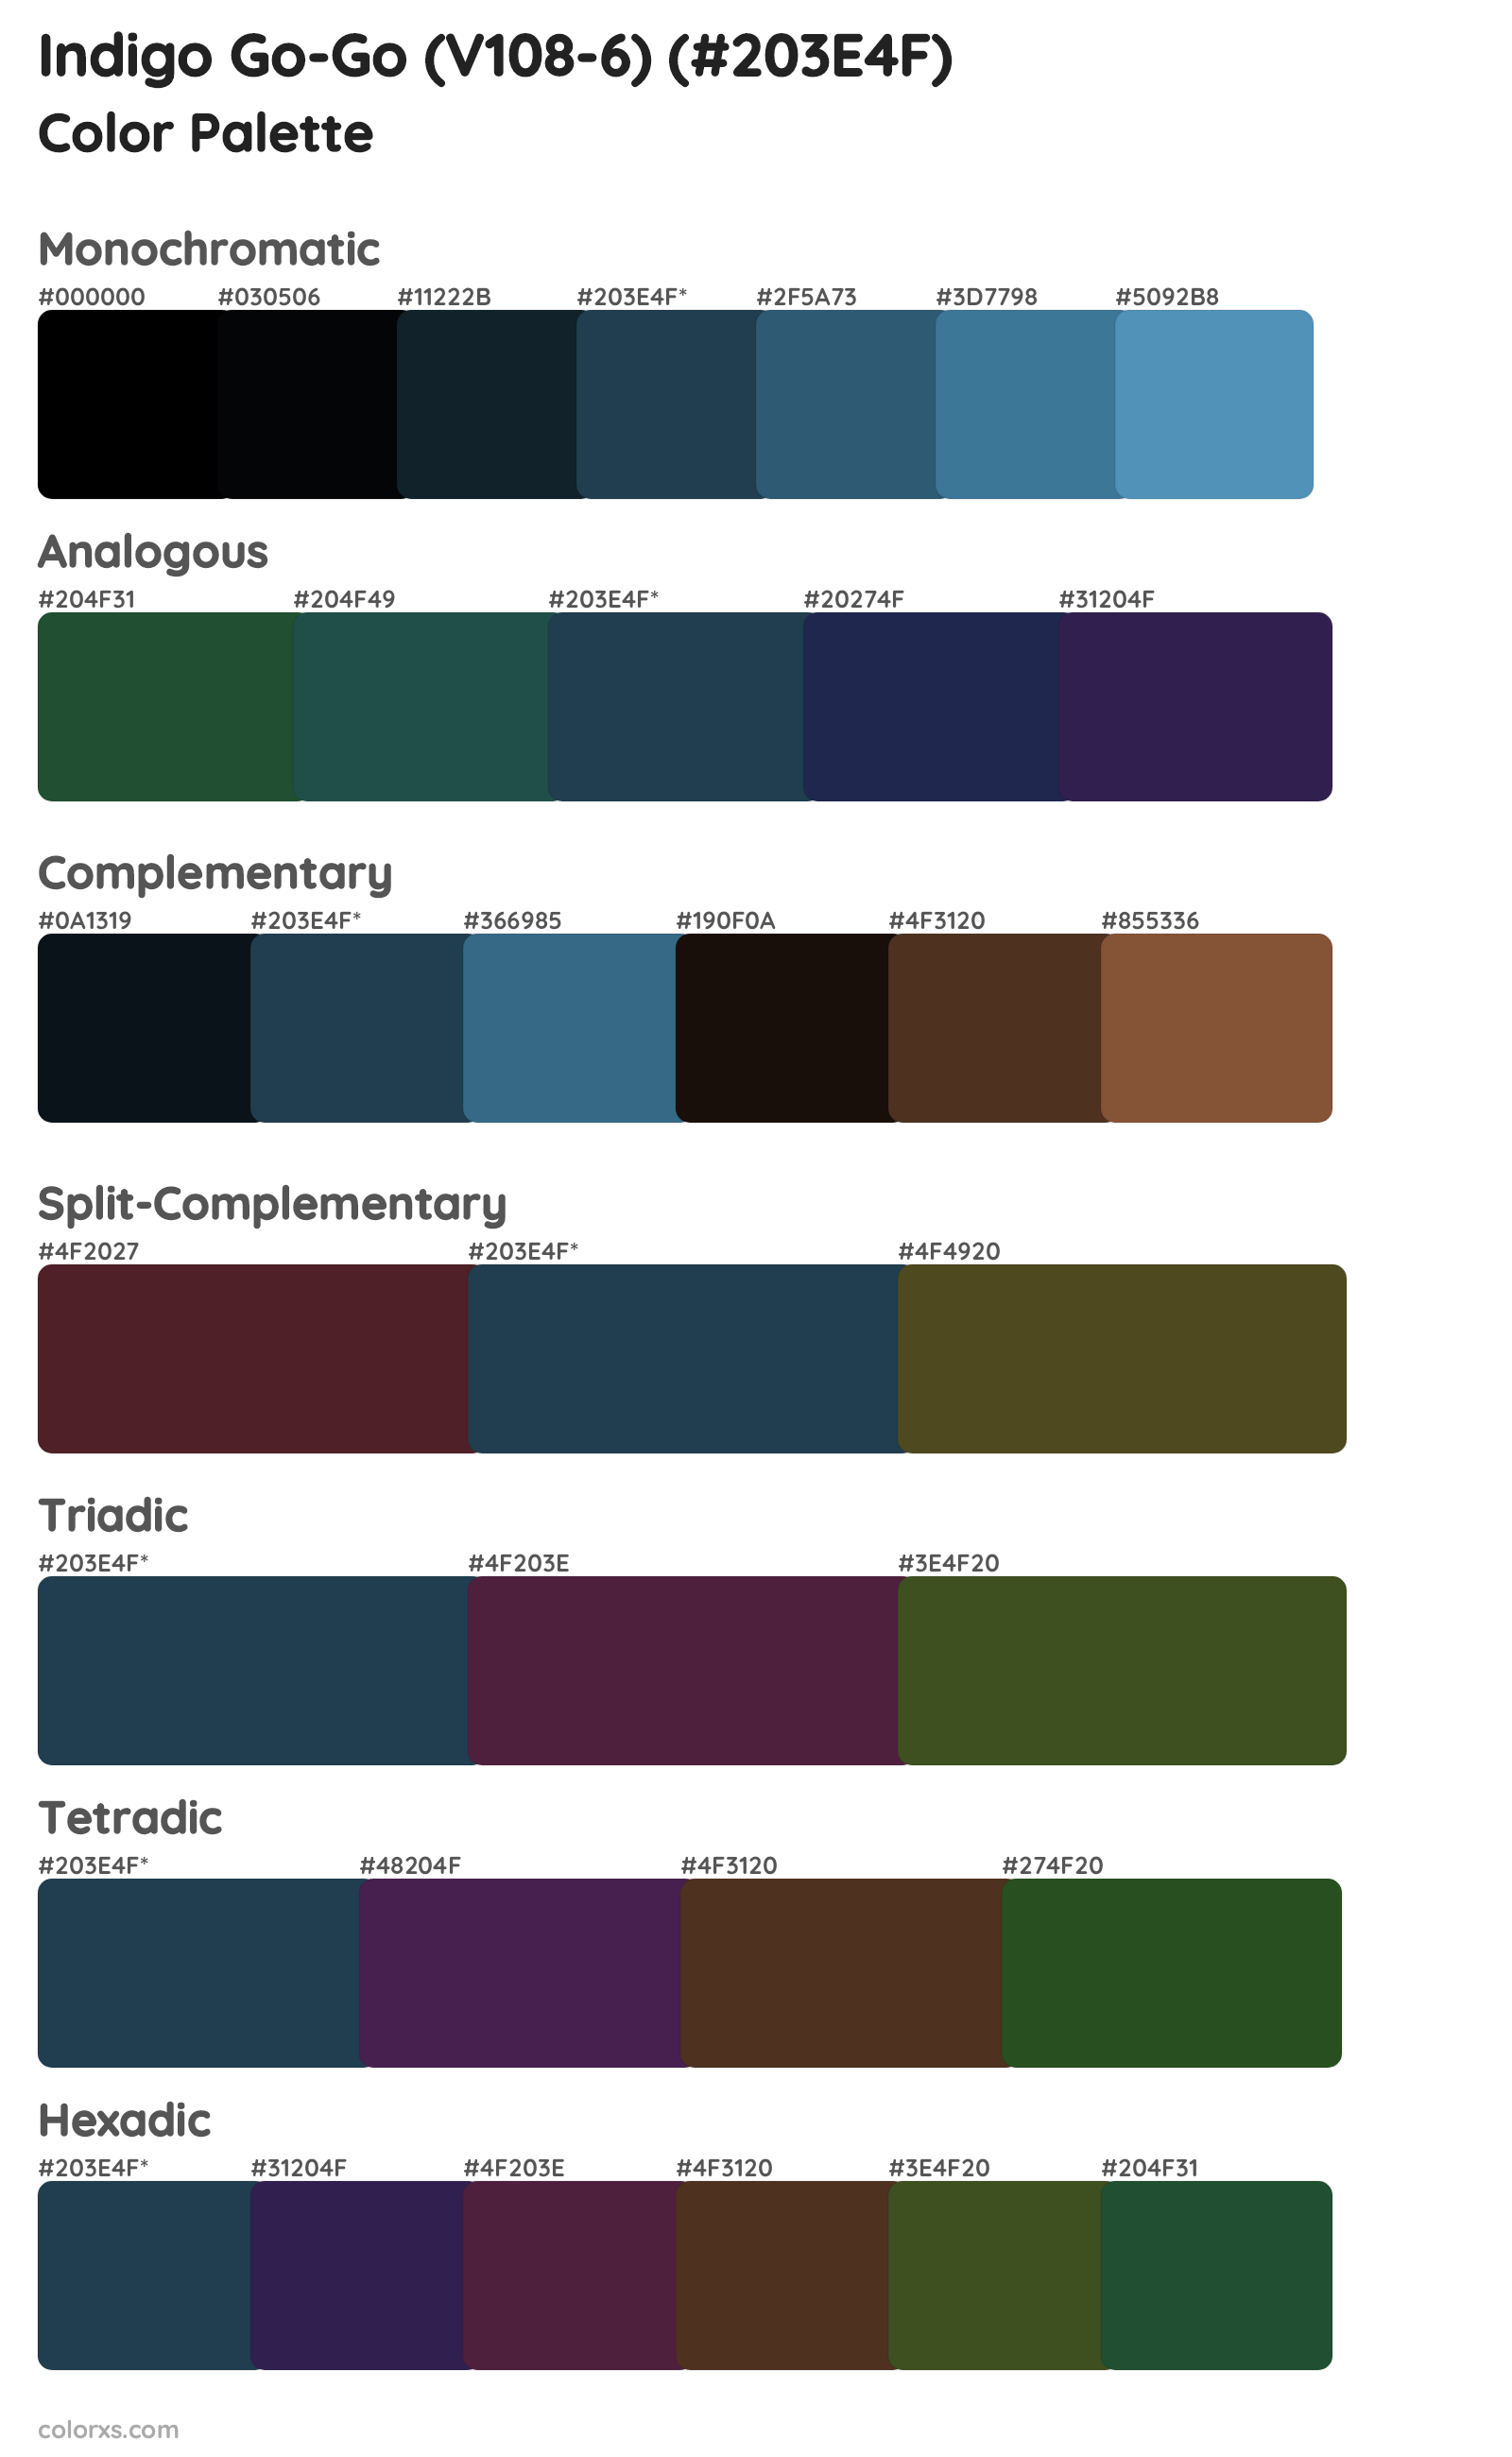 Indigo Go-Go (V108-6) Color Scheme Palettes